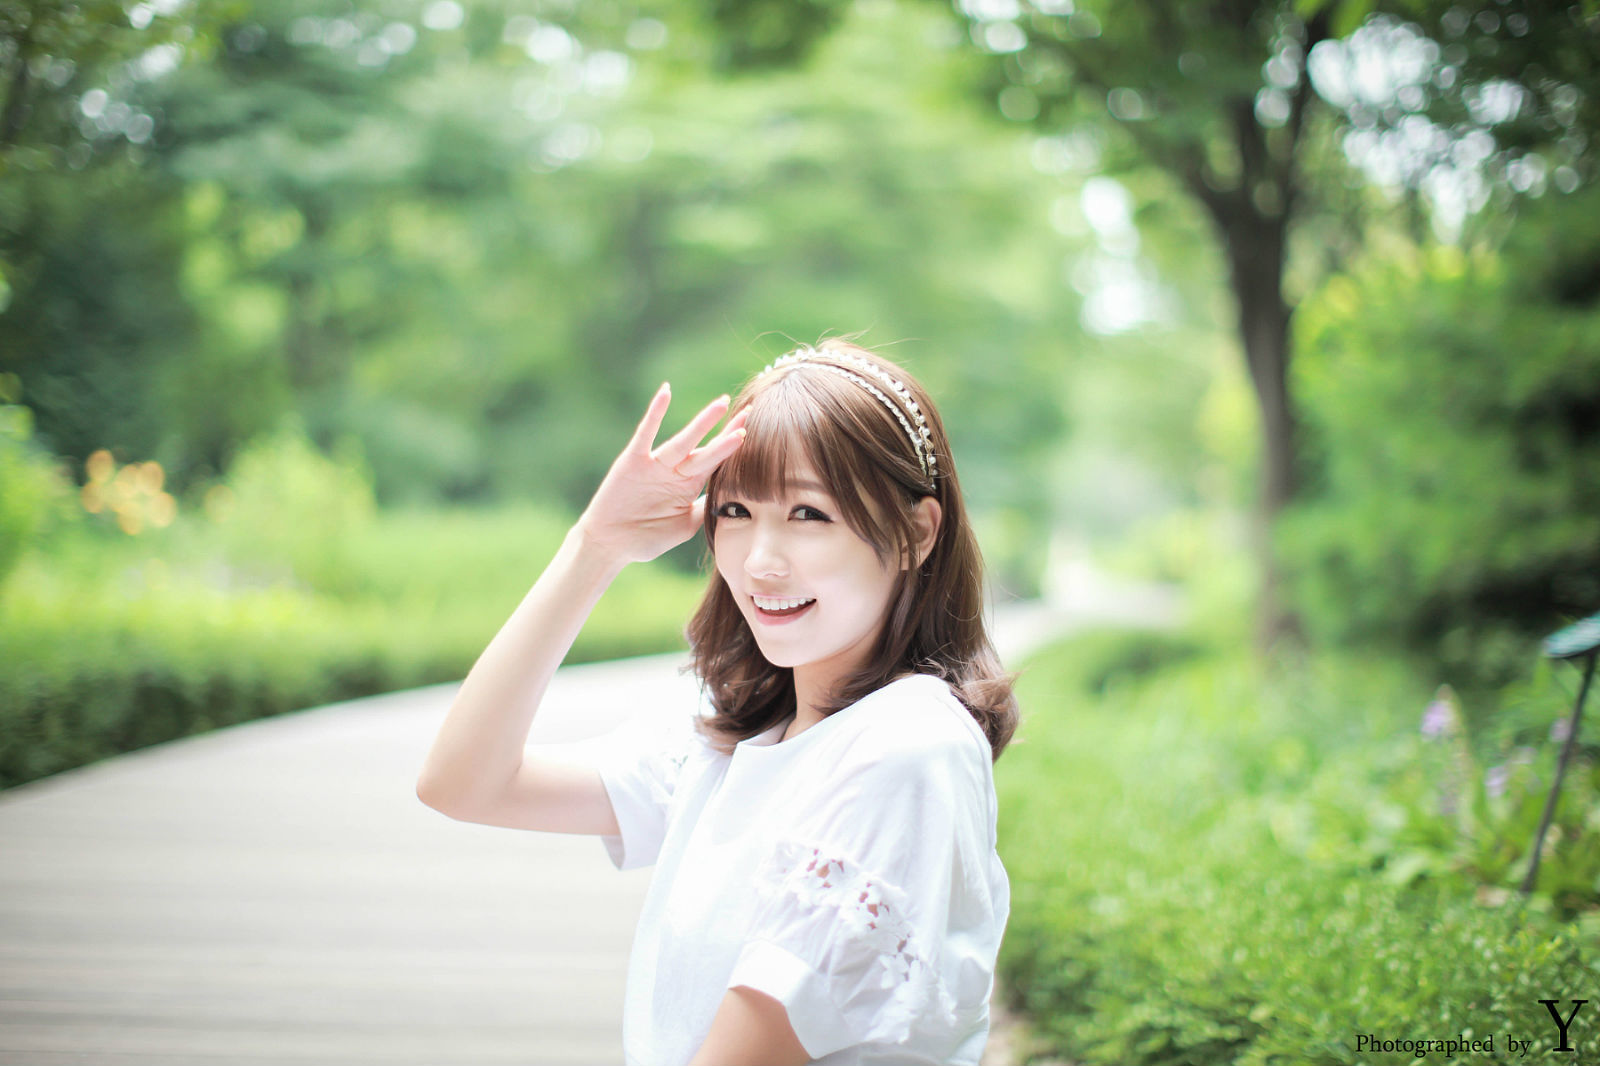 Lee Eun-hye „Outside Photo in Park Skirt” [koreańska piękność] Strona 19 No.a22ecc